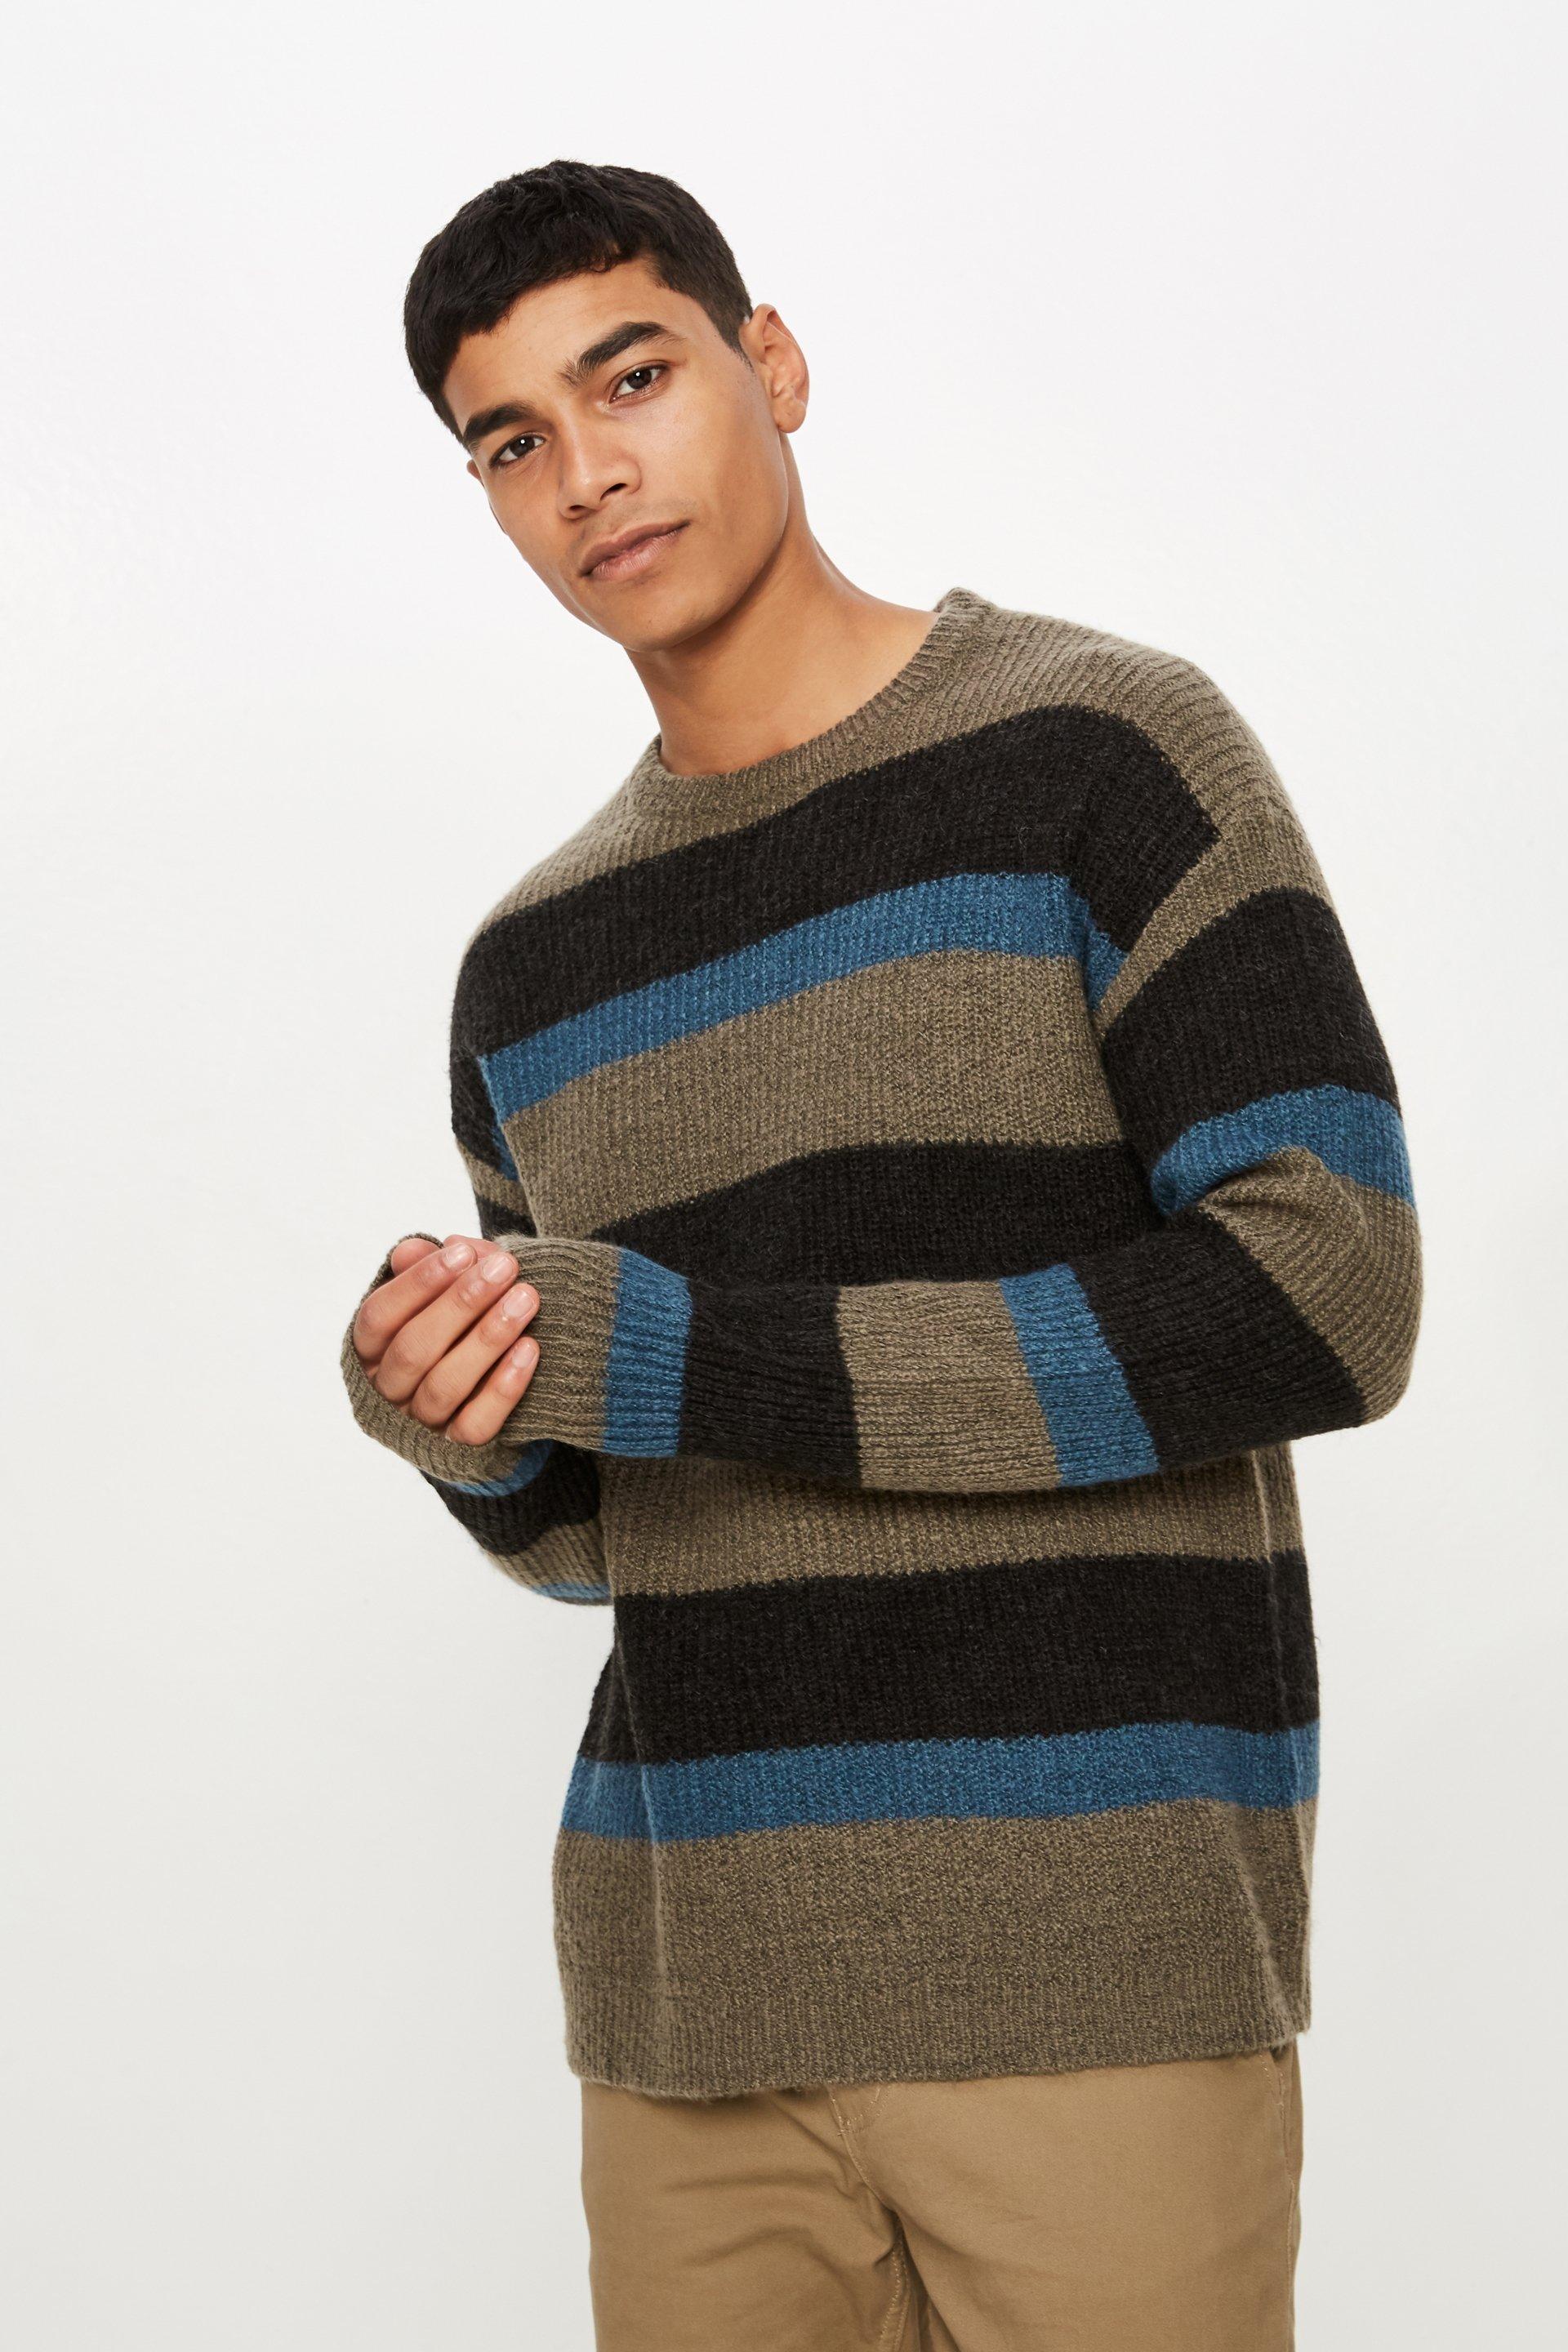 Box crew neck knit - blue stone stripe Cotton On Knitwear | Superbalist.com